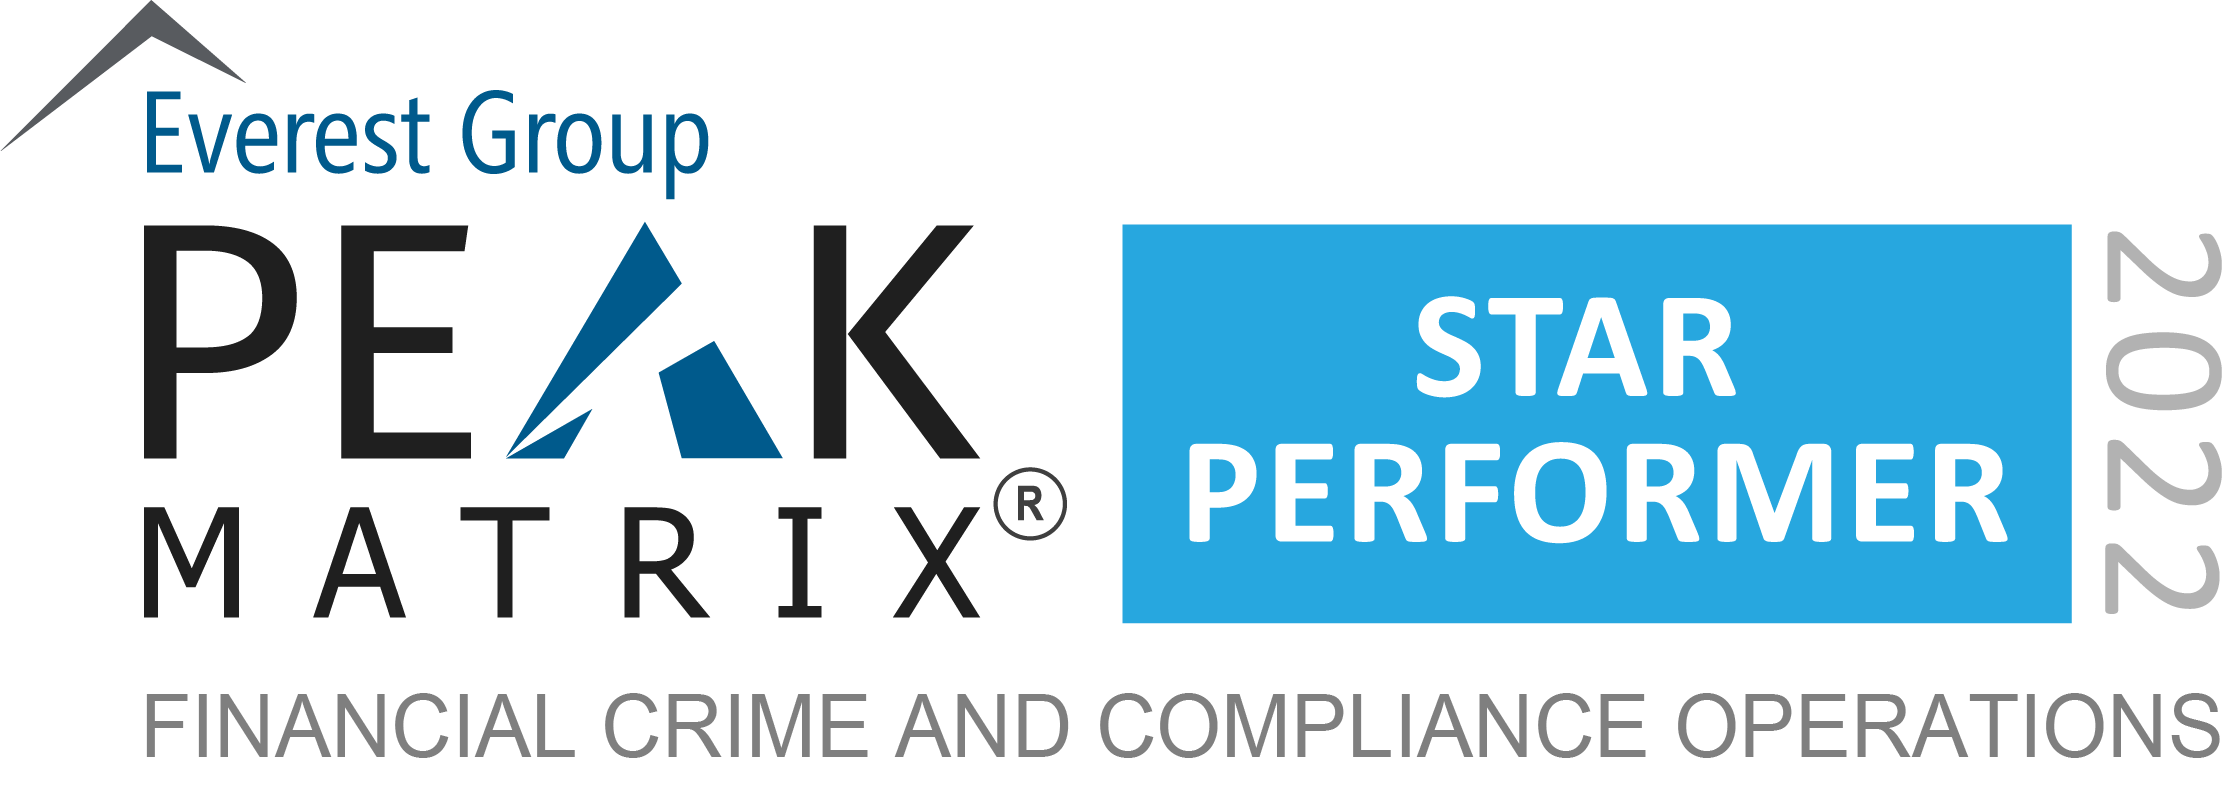 Classement Peak matrix « financial crome and compliance operations »